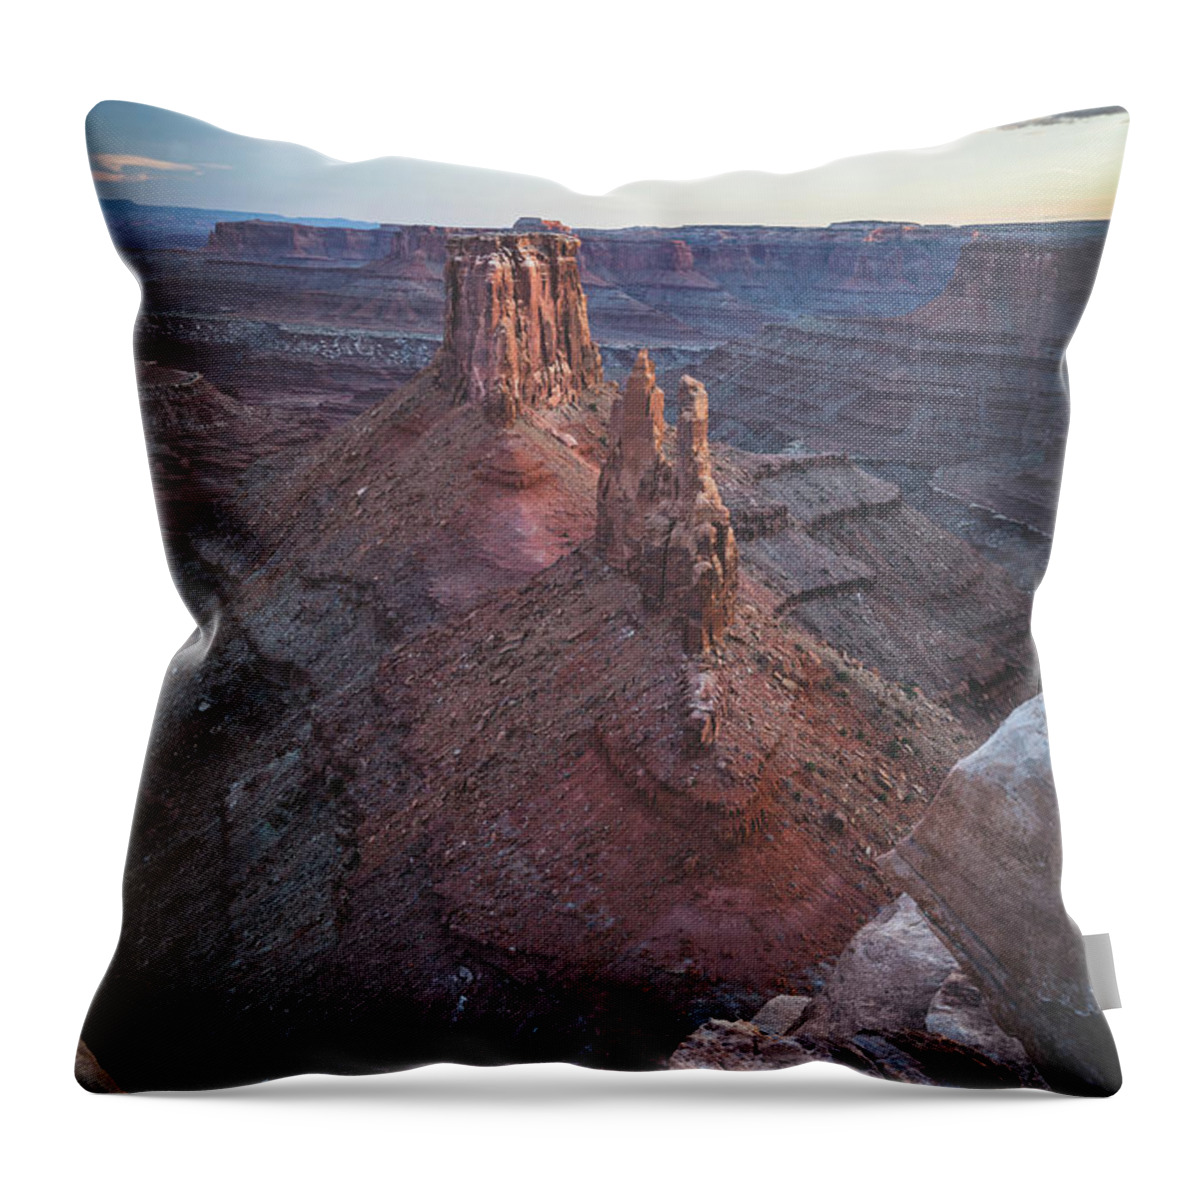 Utah Throw Pillow featuring the photograph Marlboro Point #4 by Mati Krimerman